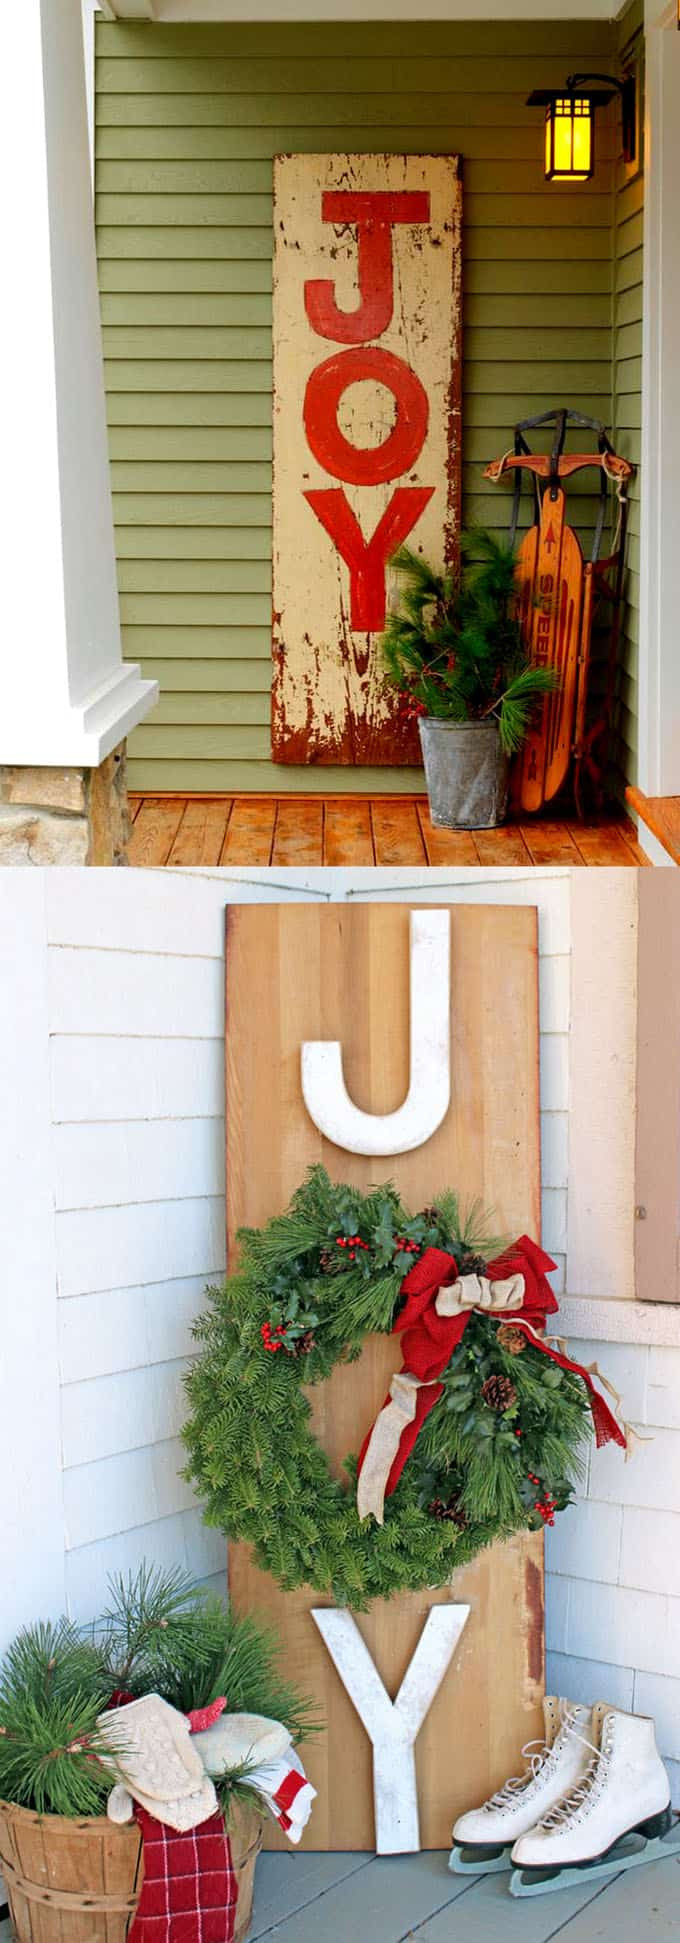 Best ideas about DIY Outdoor Christmas Decor
. Save or Pin Gorgeous Outdoor Christmas Decorations 32 Best Ideas Now.